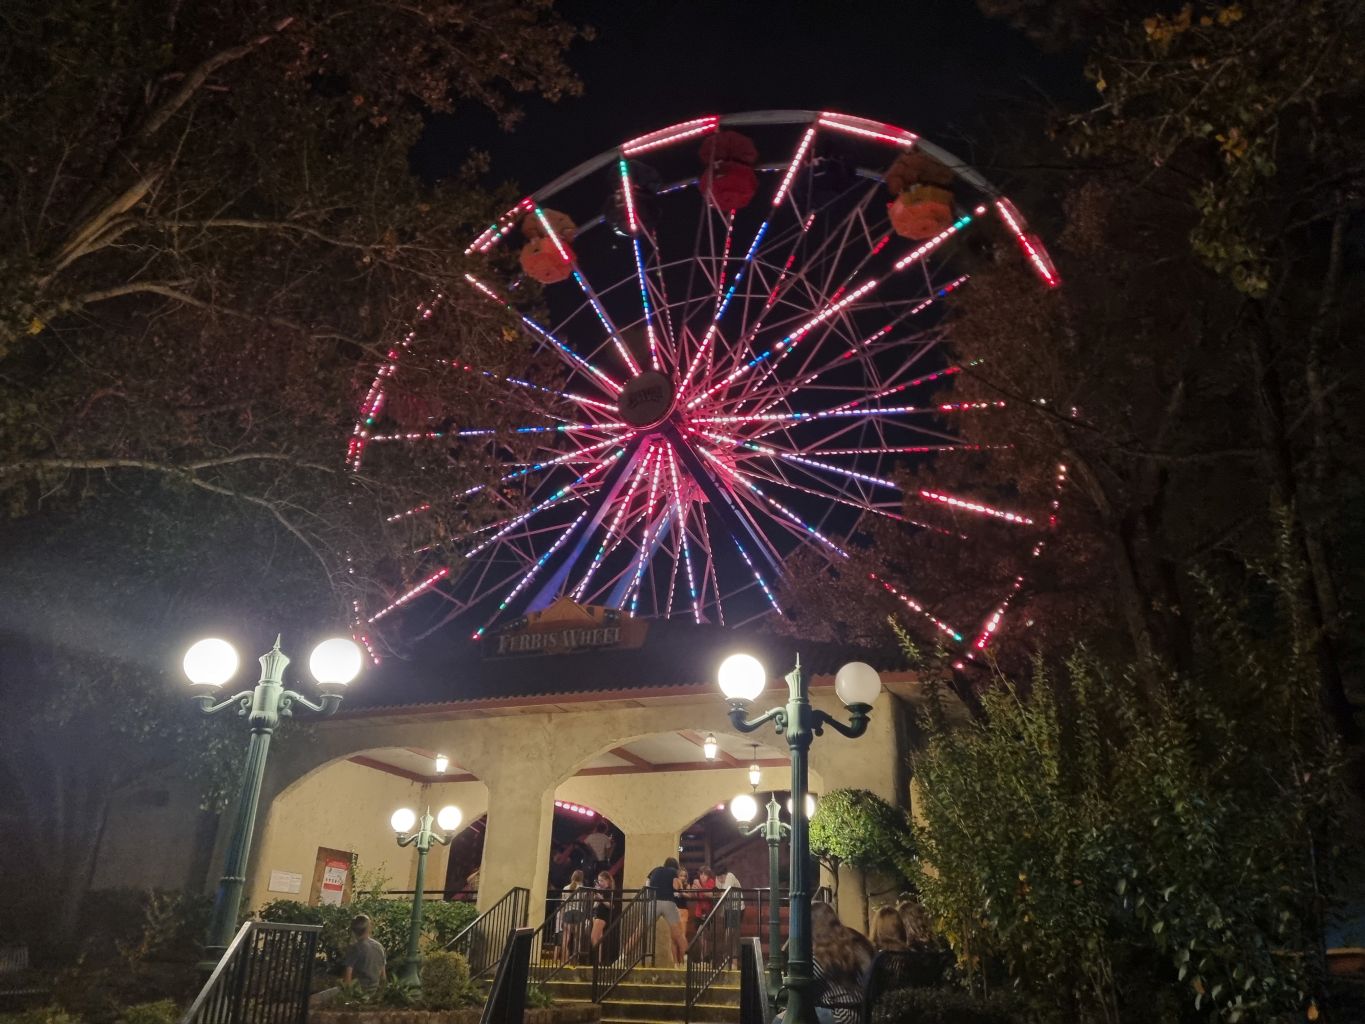 Grand Centennial Ferris Wheel